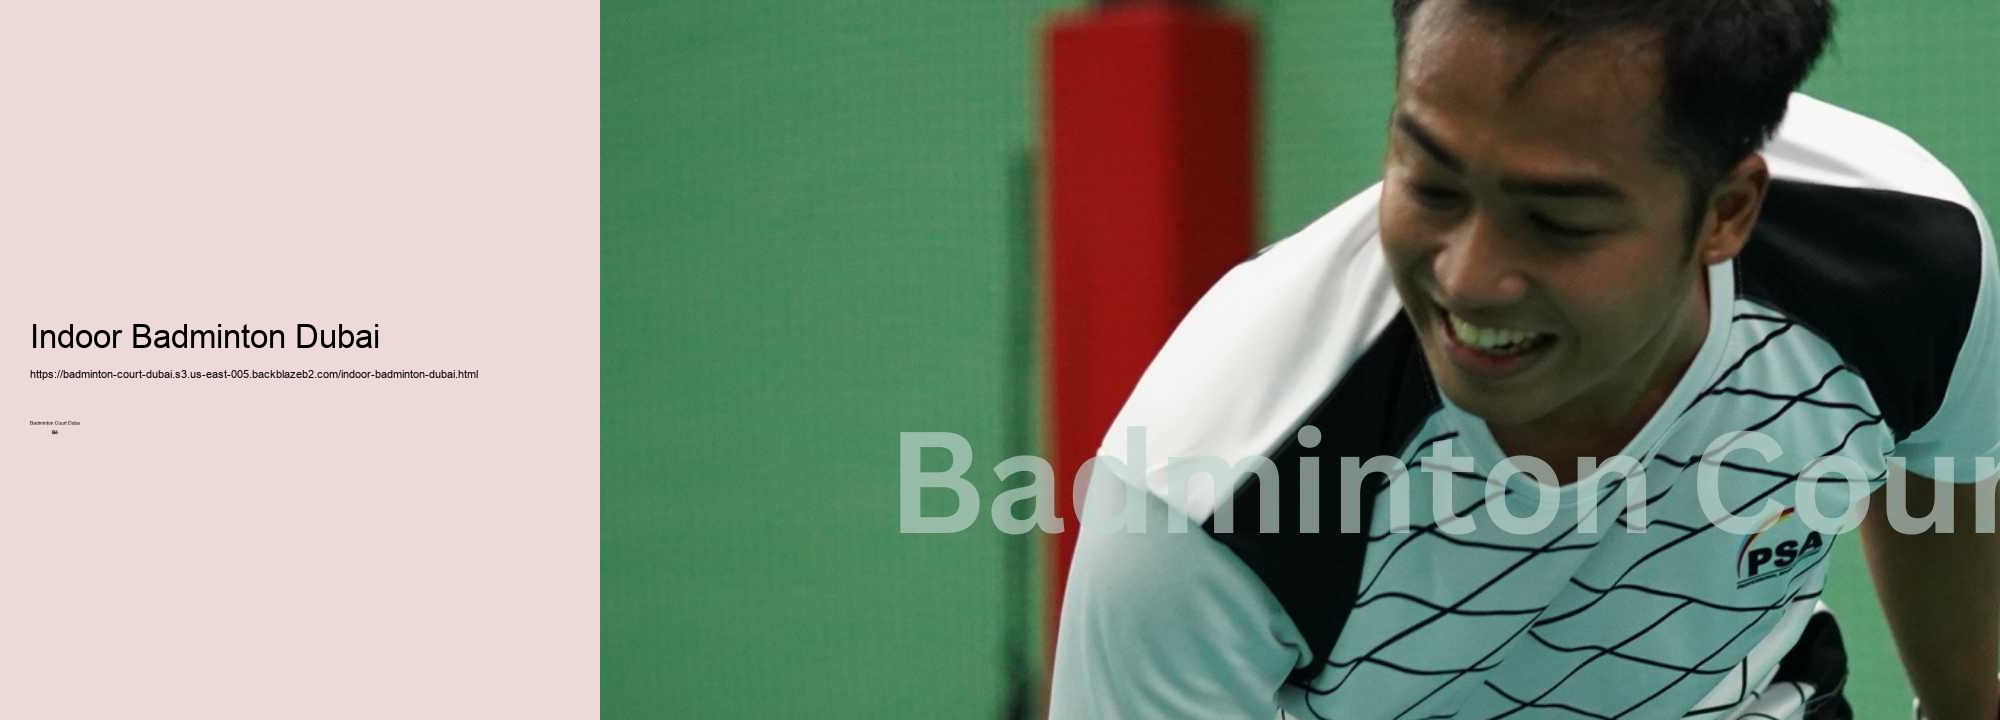 Indoor Badminton Dubai